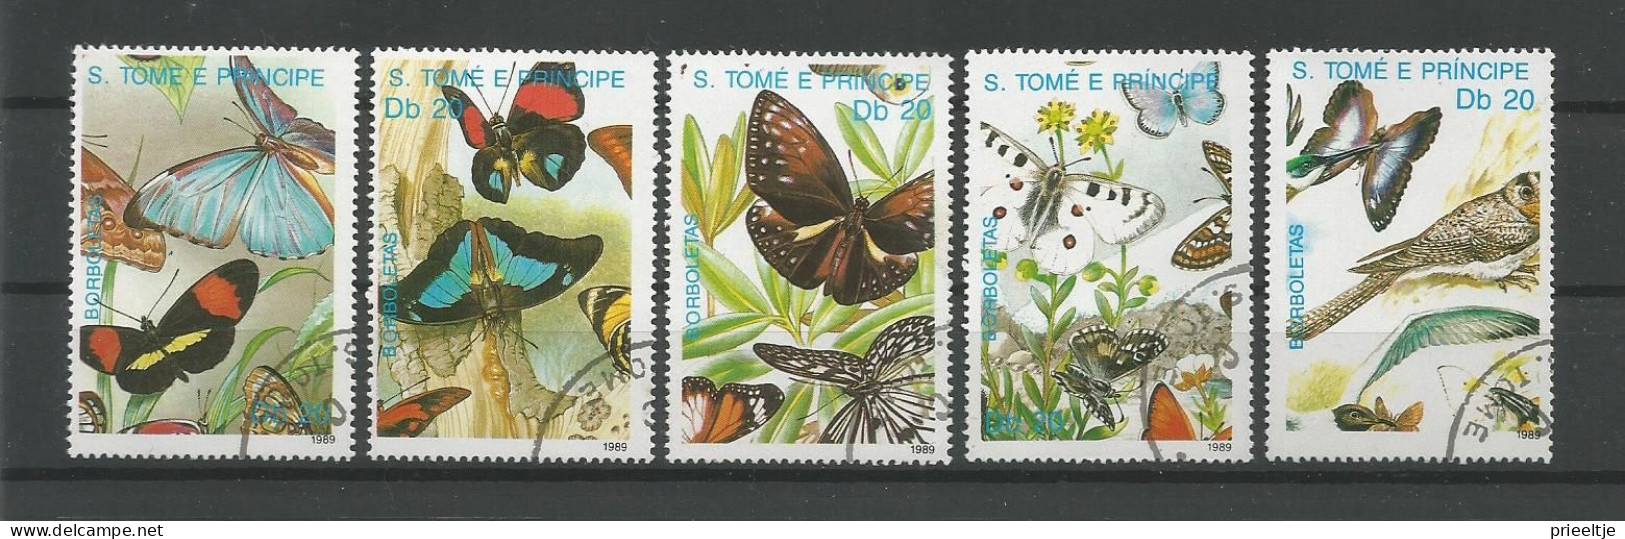 St Tome E Principe 1989 Butterflies & Birds  Y.T. 965/969 (0) - Sao Tome And Principe